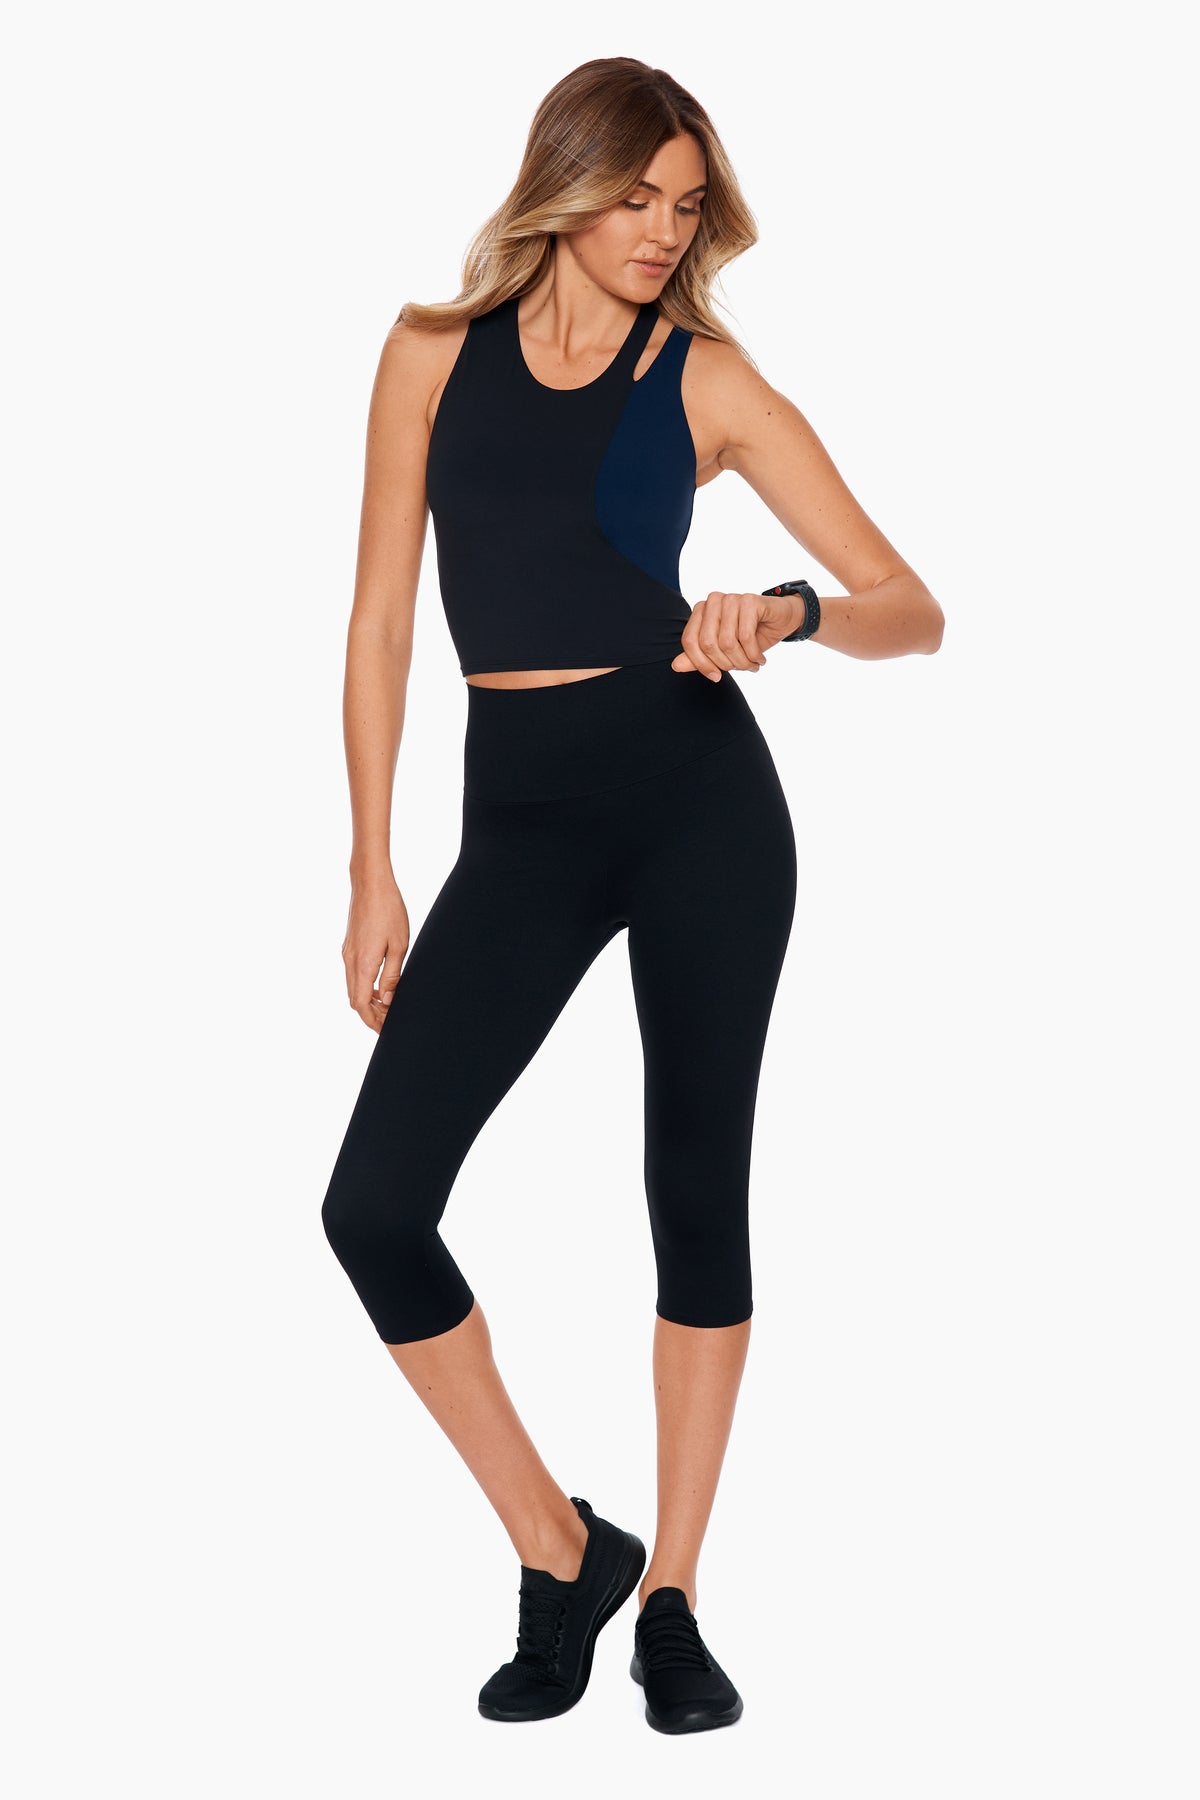 Legging Capri, Women Yoga Gear, Athletic & Casual Clothes